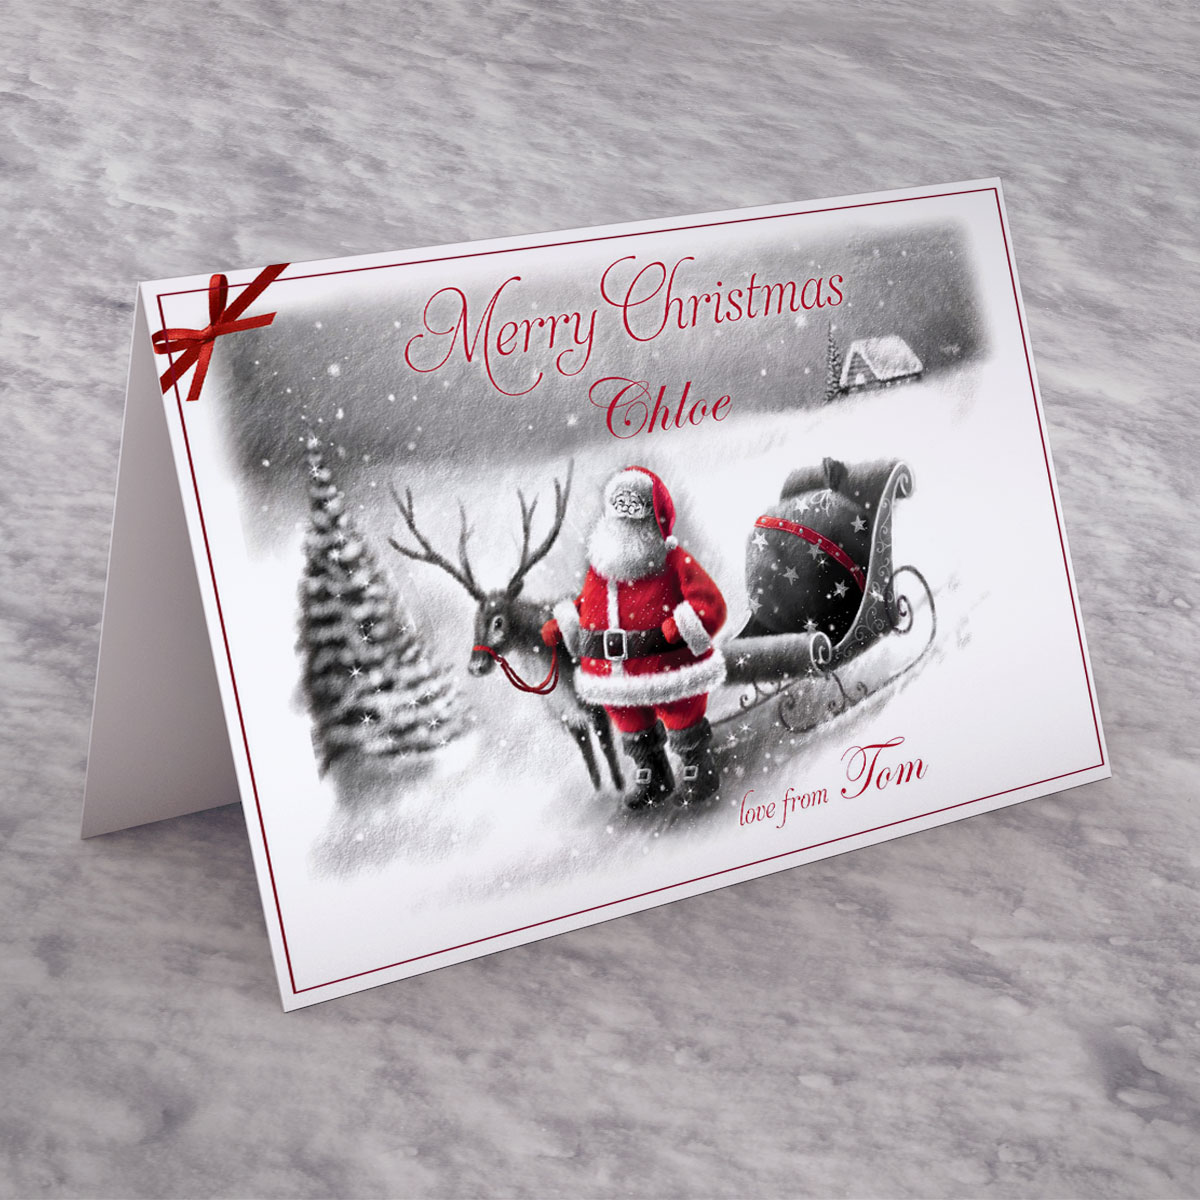 Personalised Christmas Card - Santa In Snow